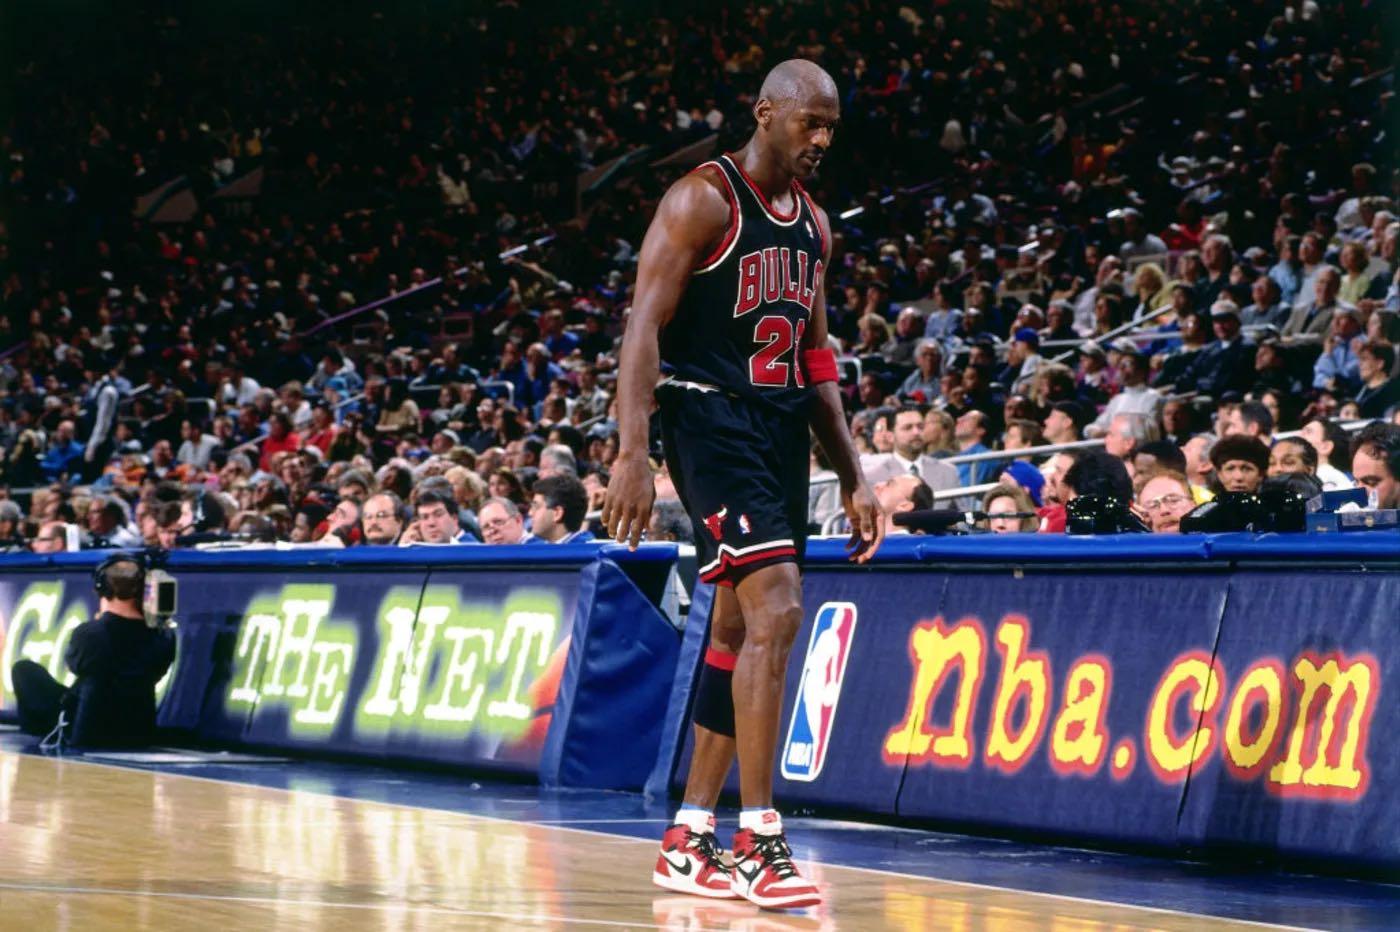 Michael Jordan Autographed '97-'98 Alternate Black Bulls Jersey